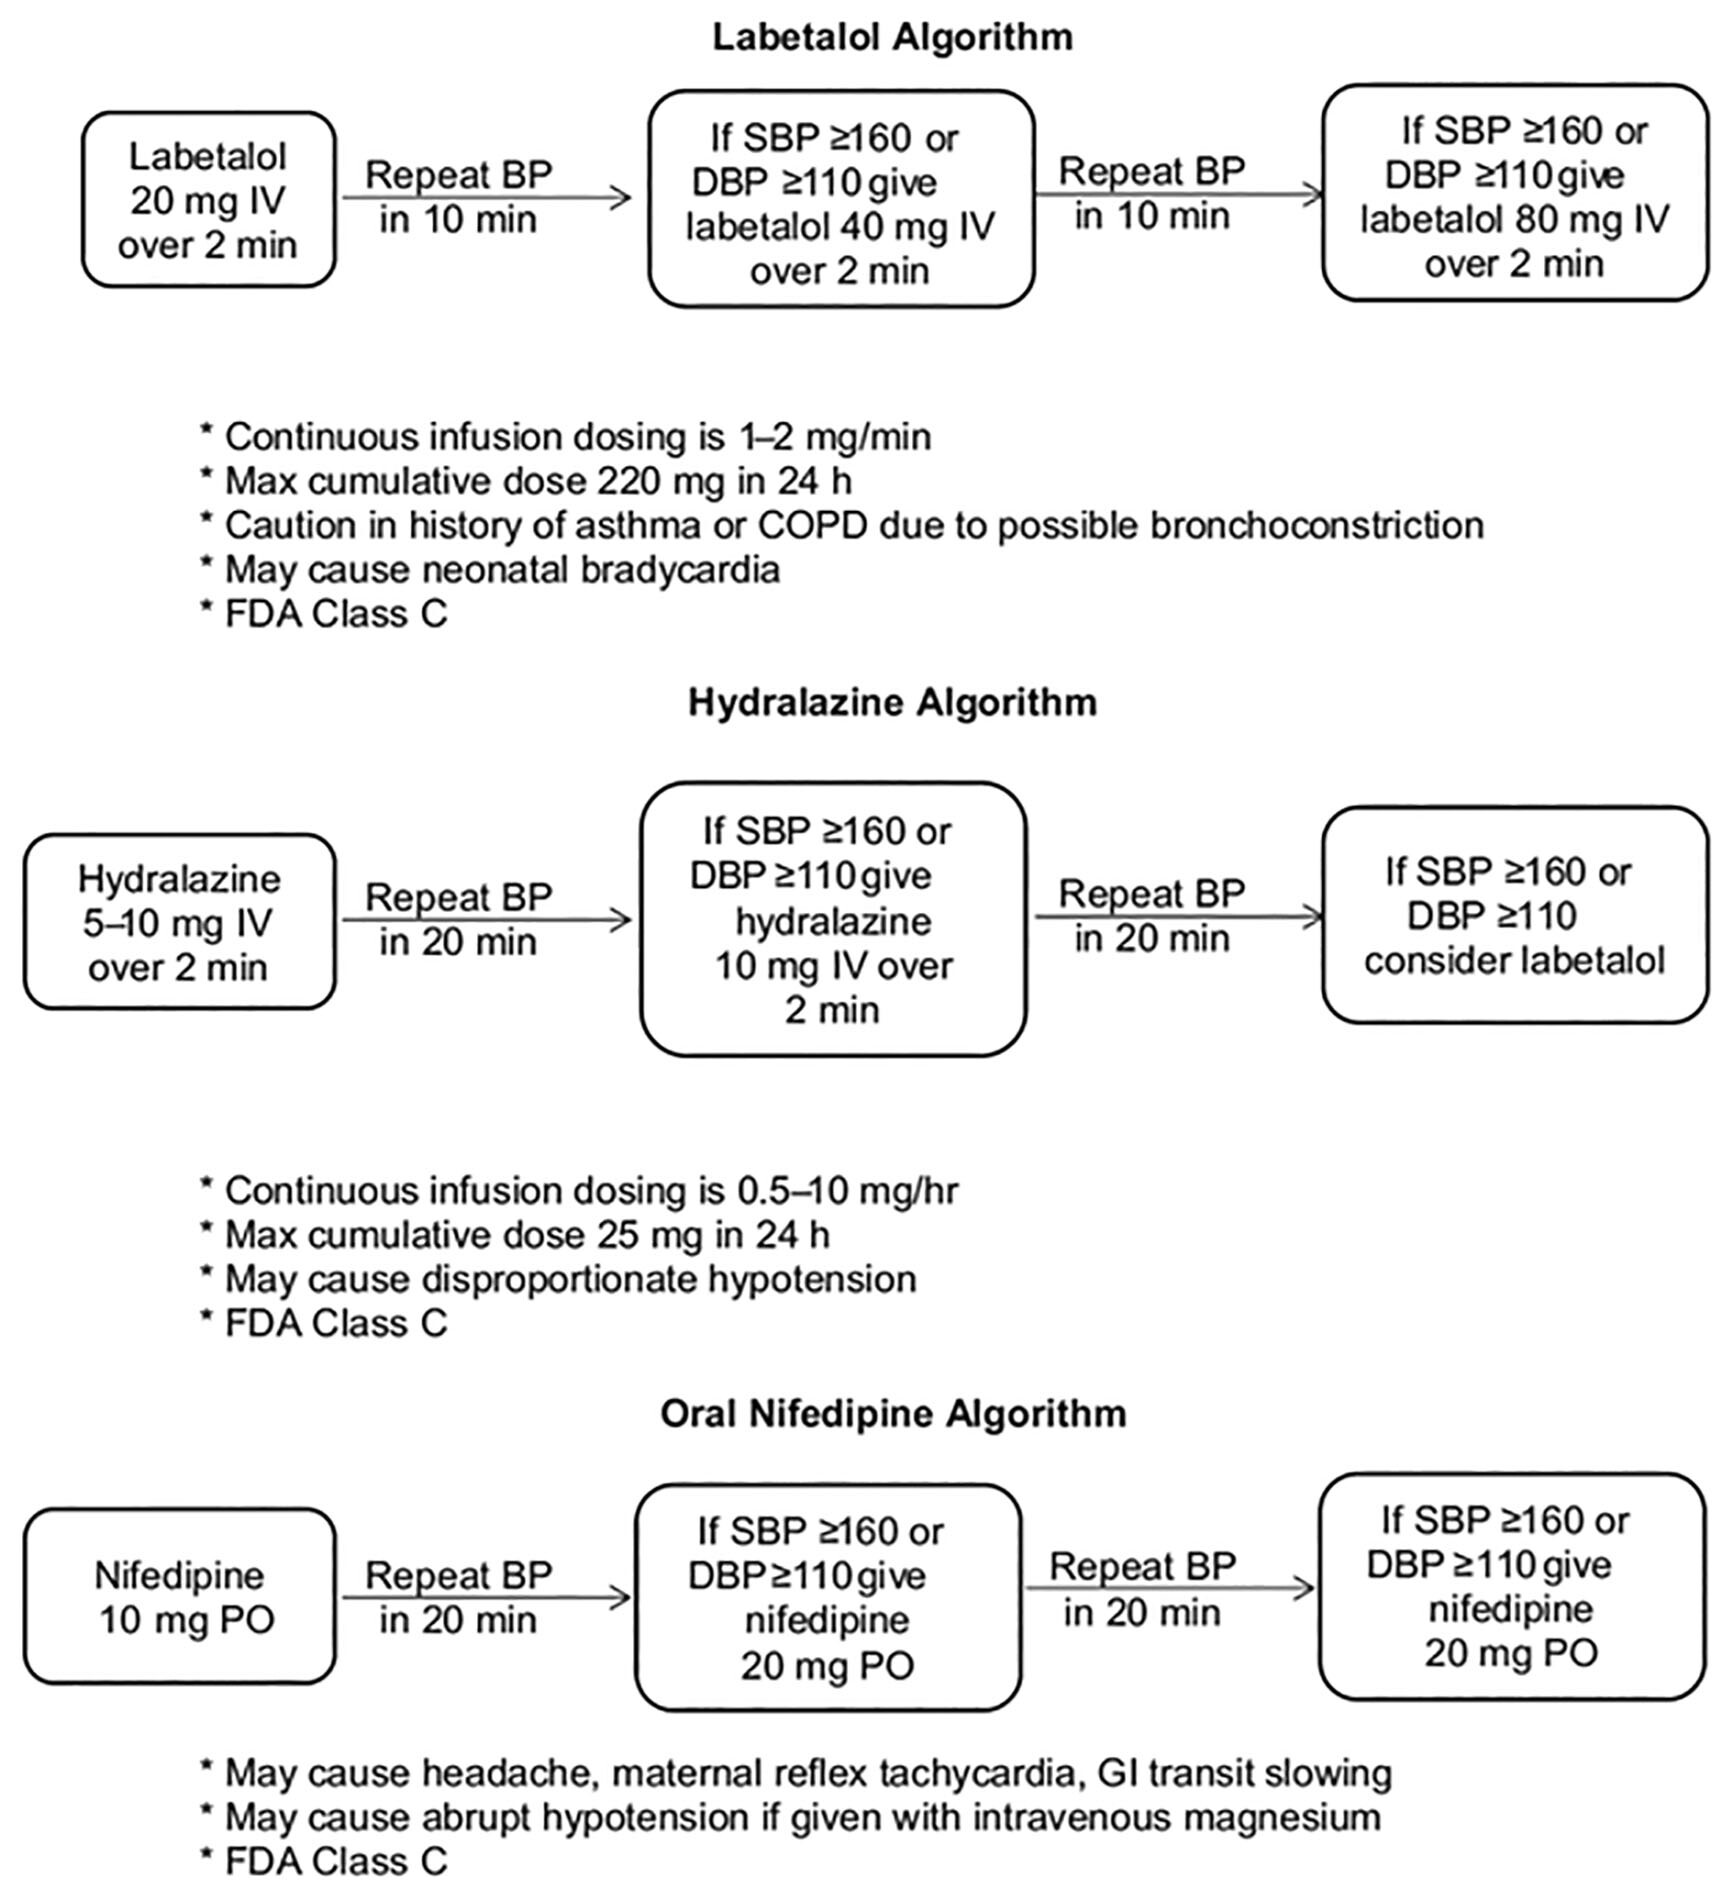 Hydralazine vs labetalol for the treatment of severe hypertensive